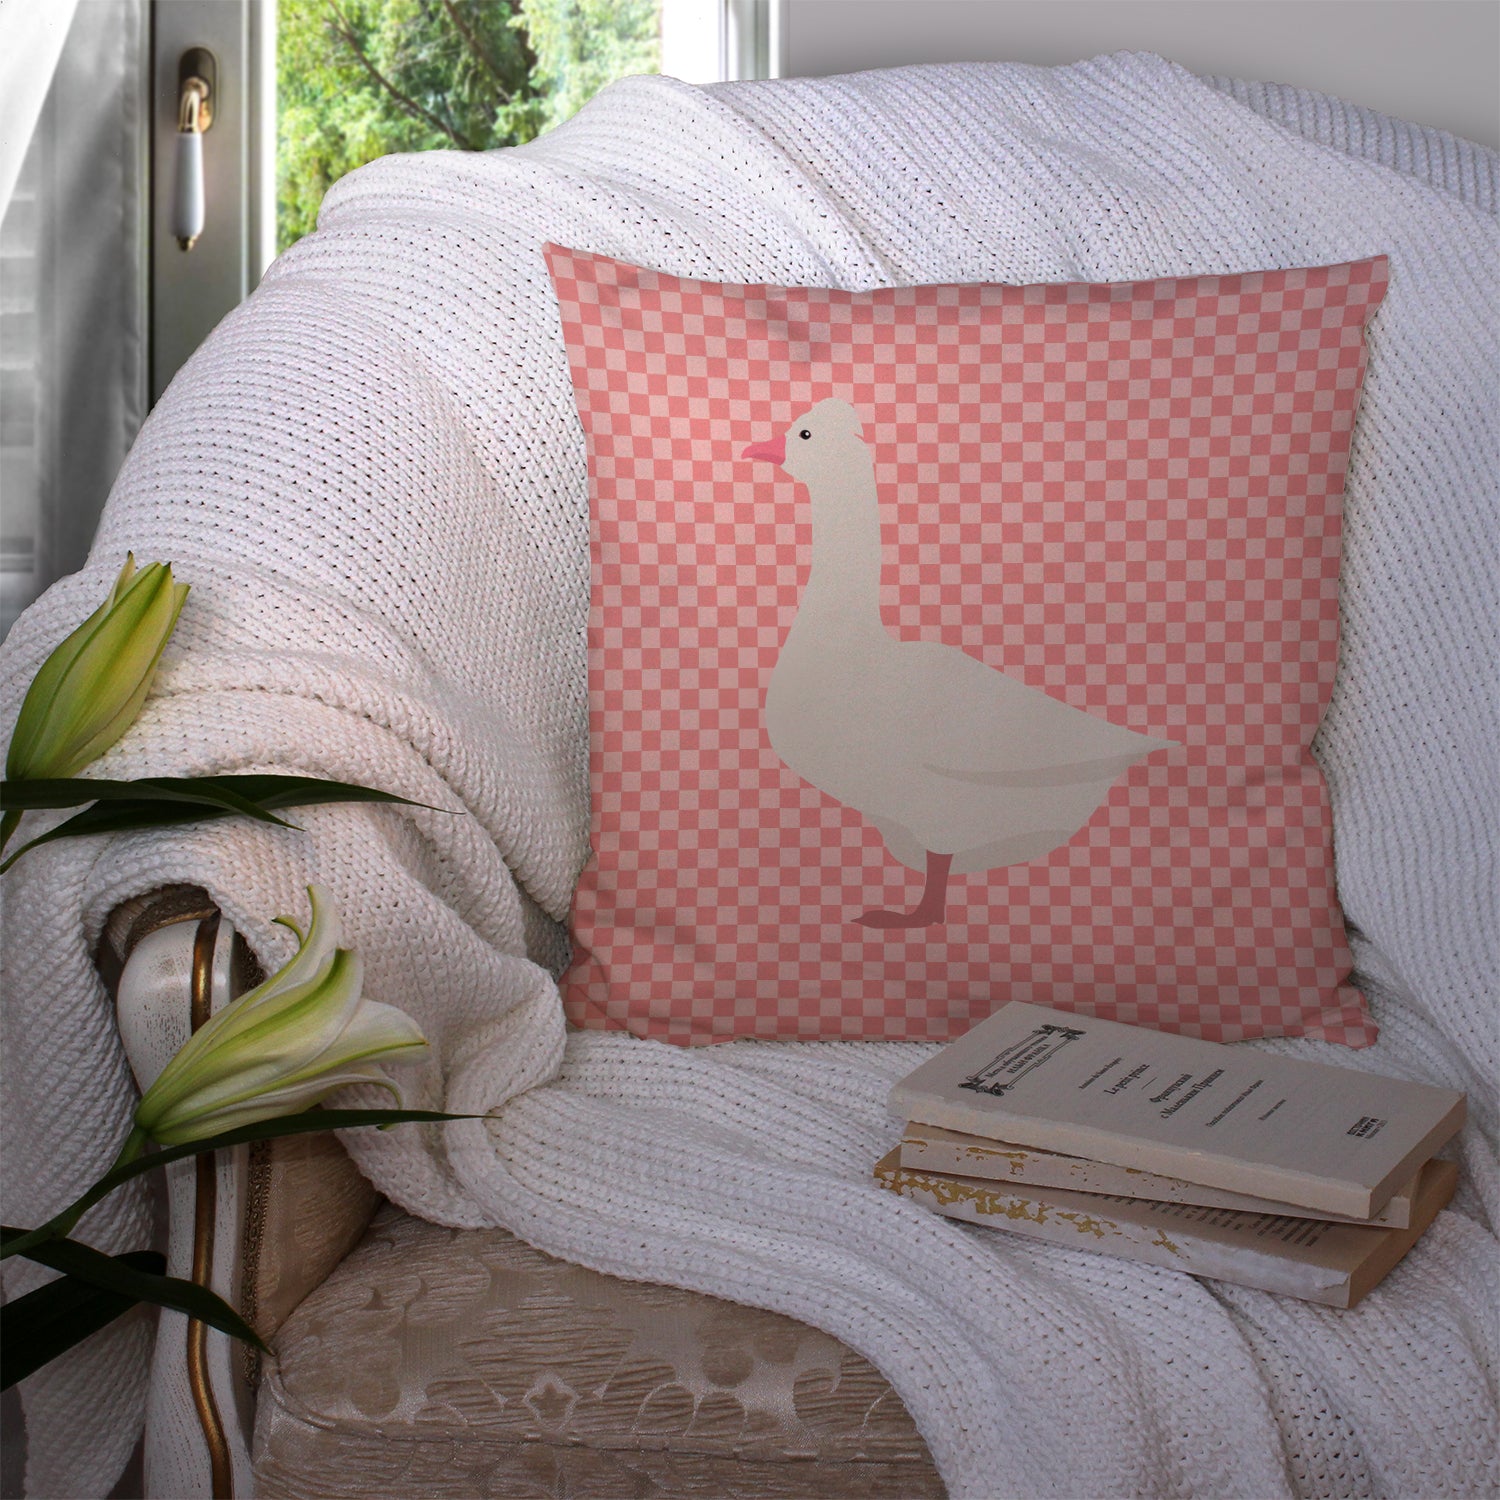 Roman Goose Pink Check Fabric Decorative Pillow BB7898PW1414 - the-store.com